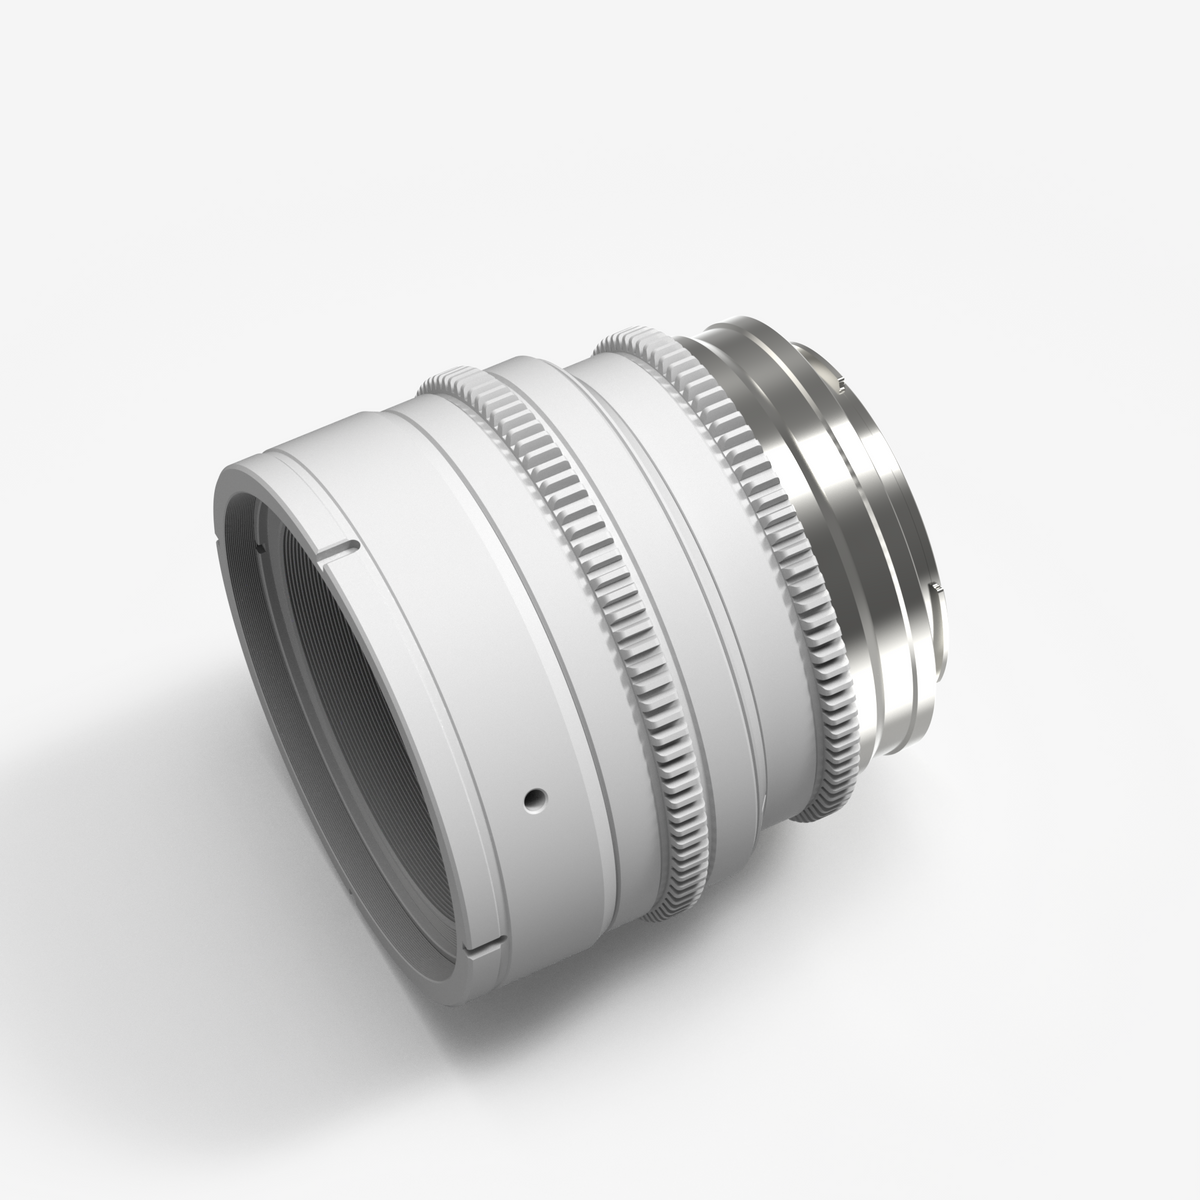 Dulens 43mm EF-Mount Kit for APO MINI Prime 43mm Lens